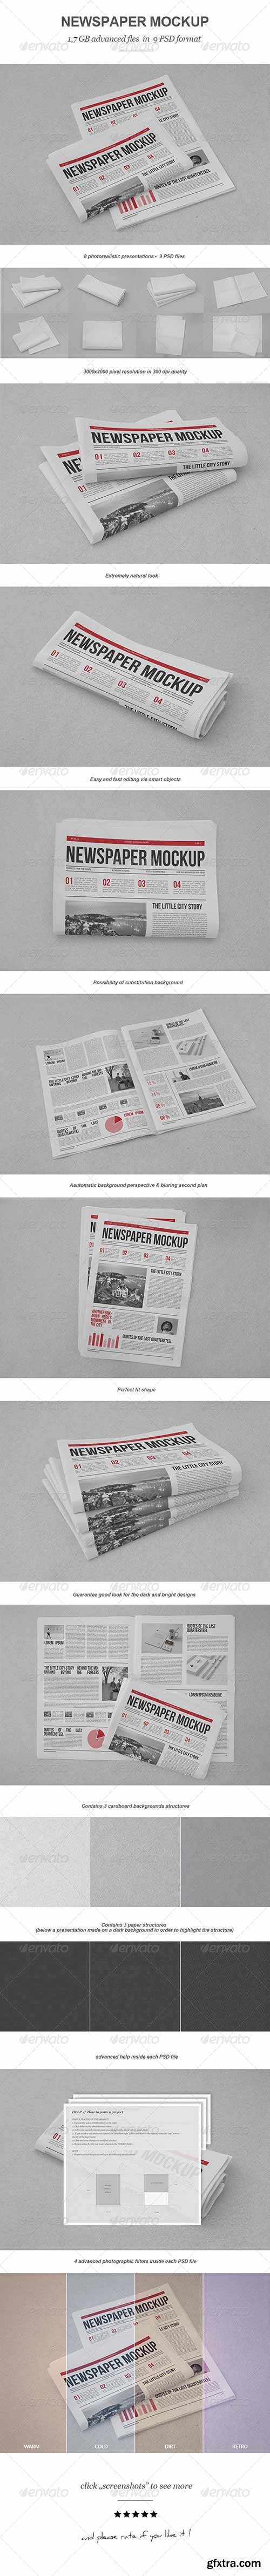 Graphicriver - Newspaper Mock-up 7424162